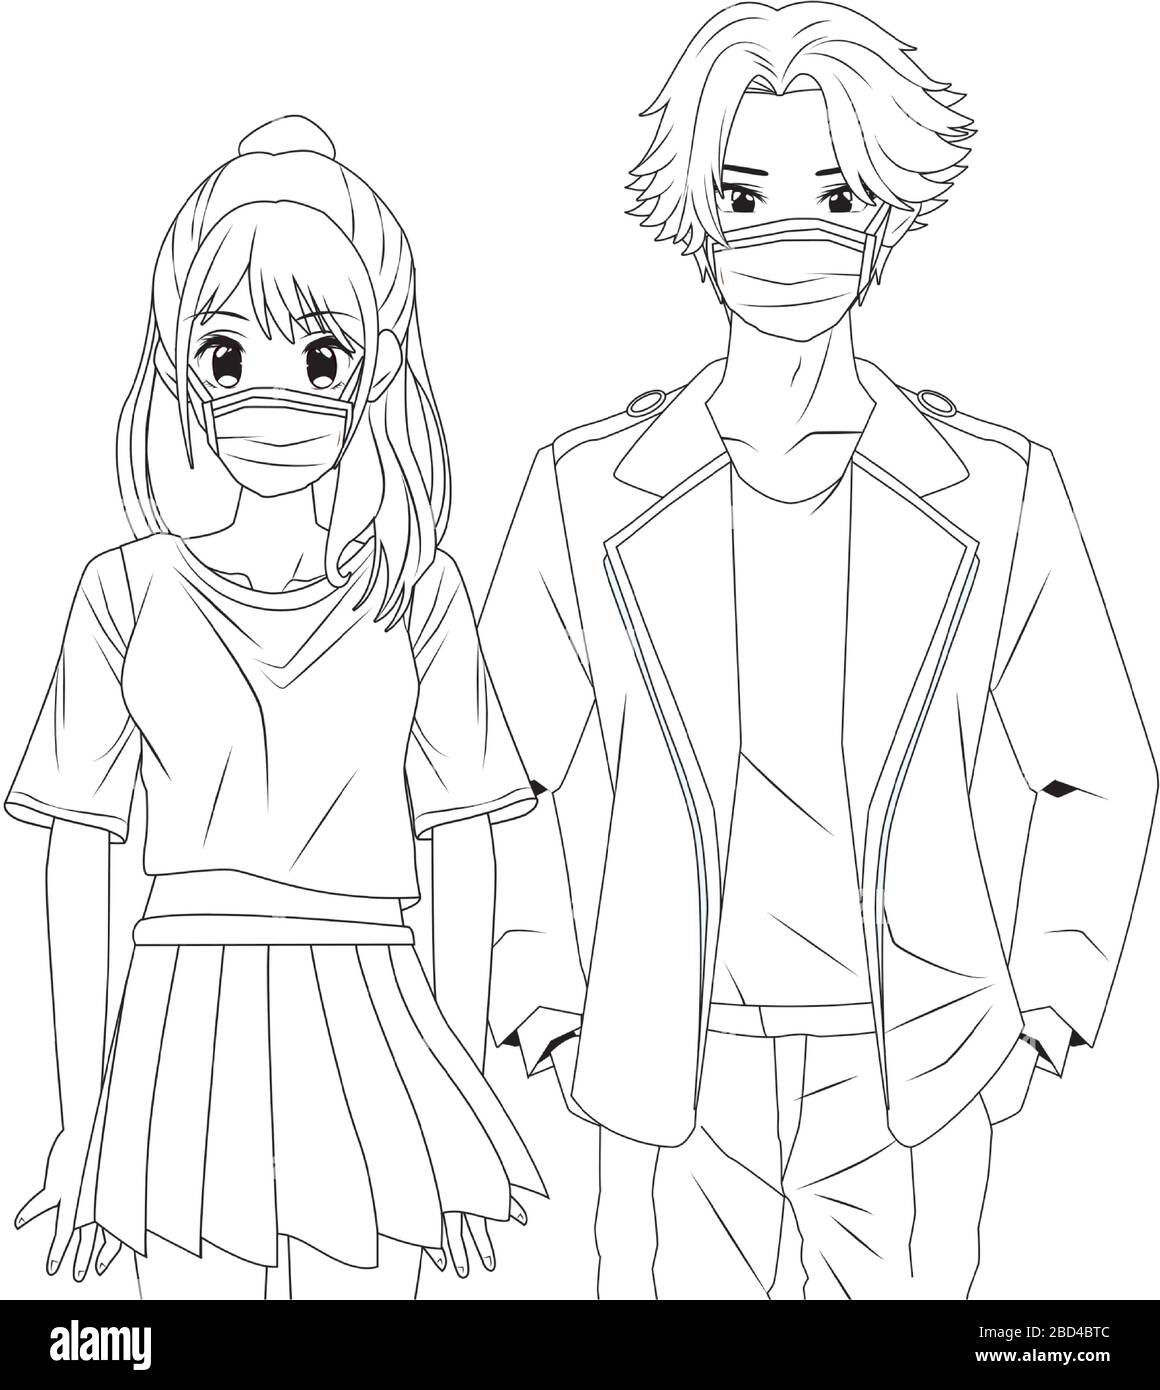 Cute Anime Couple Sketch GIF  GIFDBcom